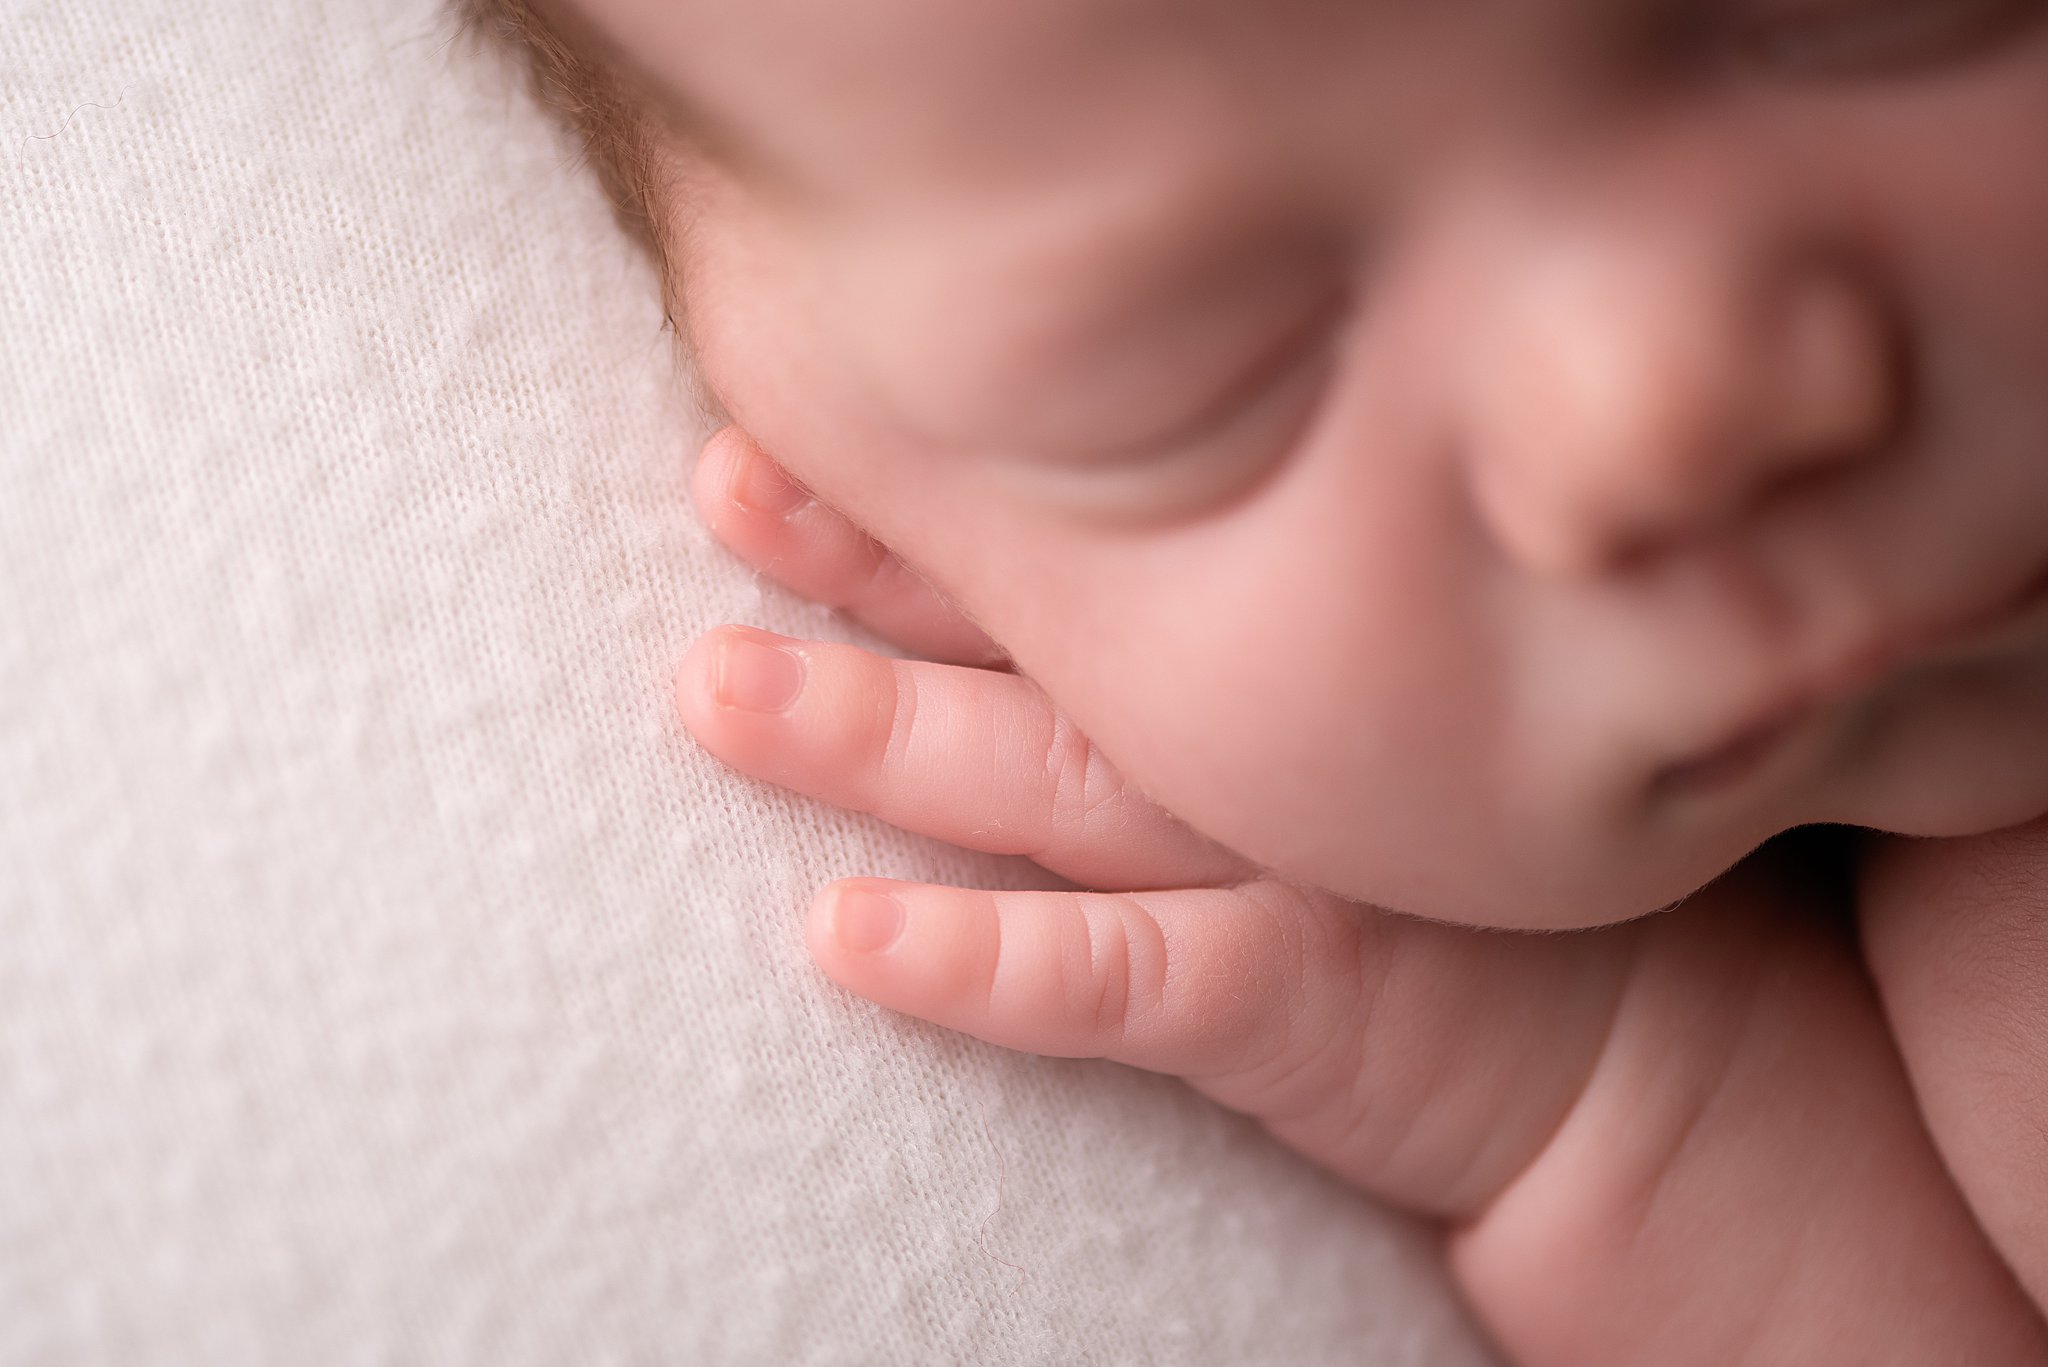 Details of a sleeping newborn baby